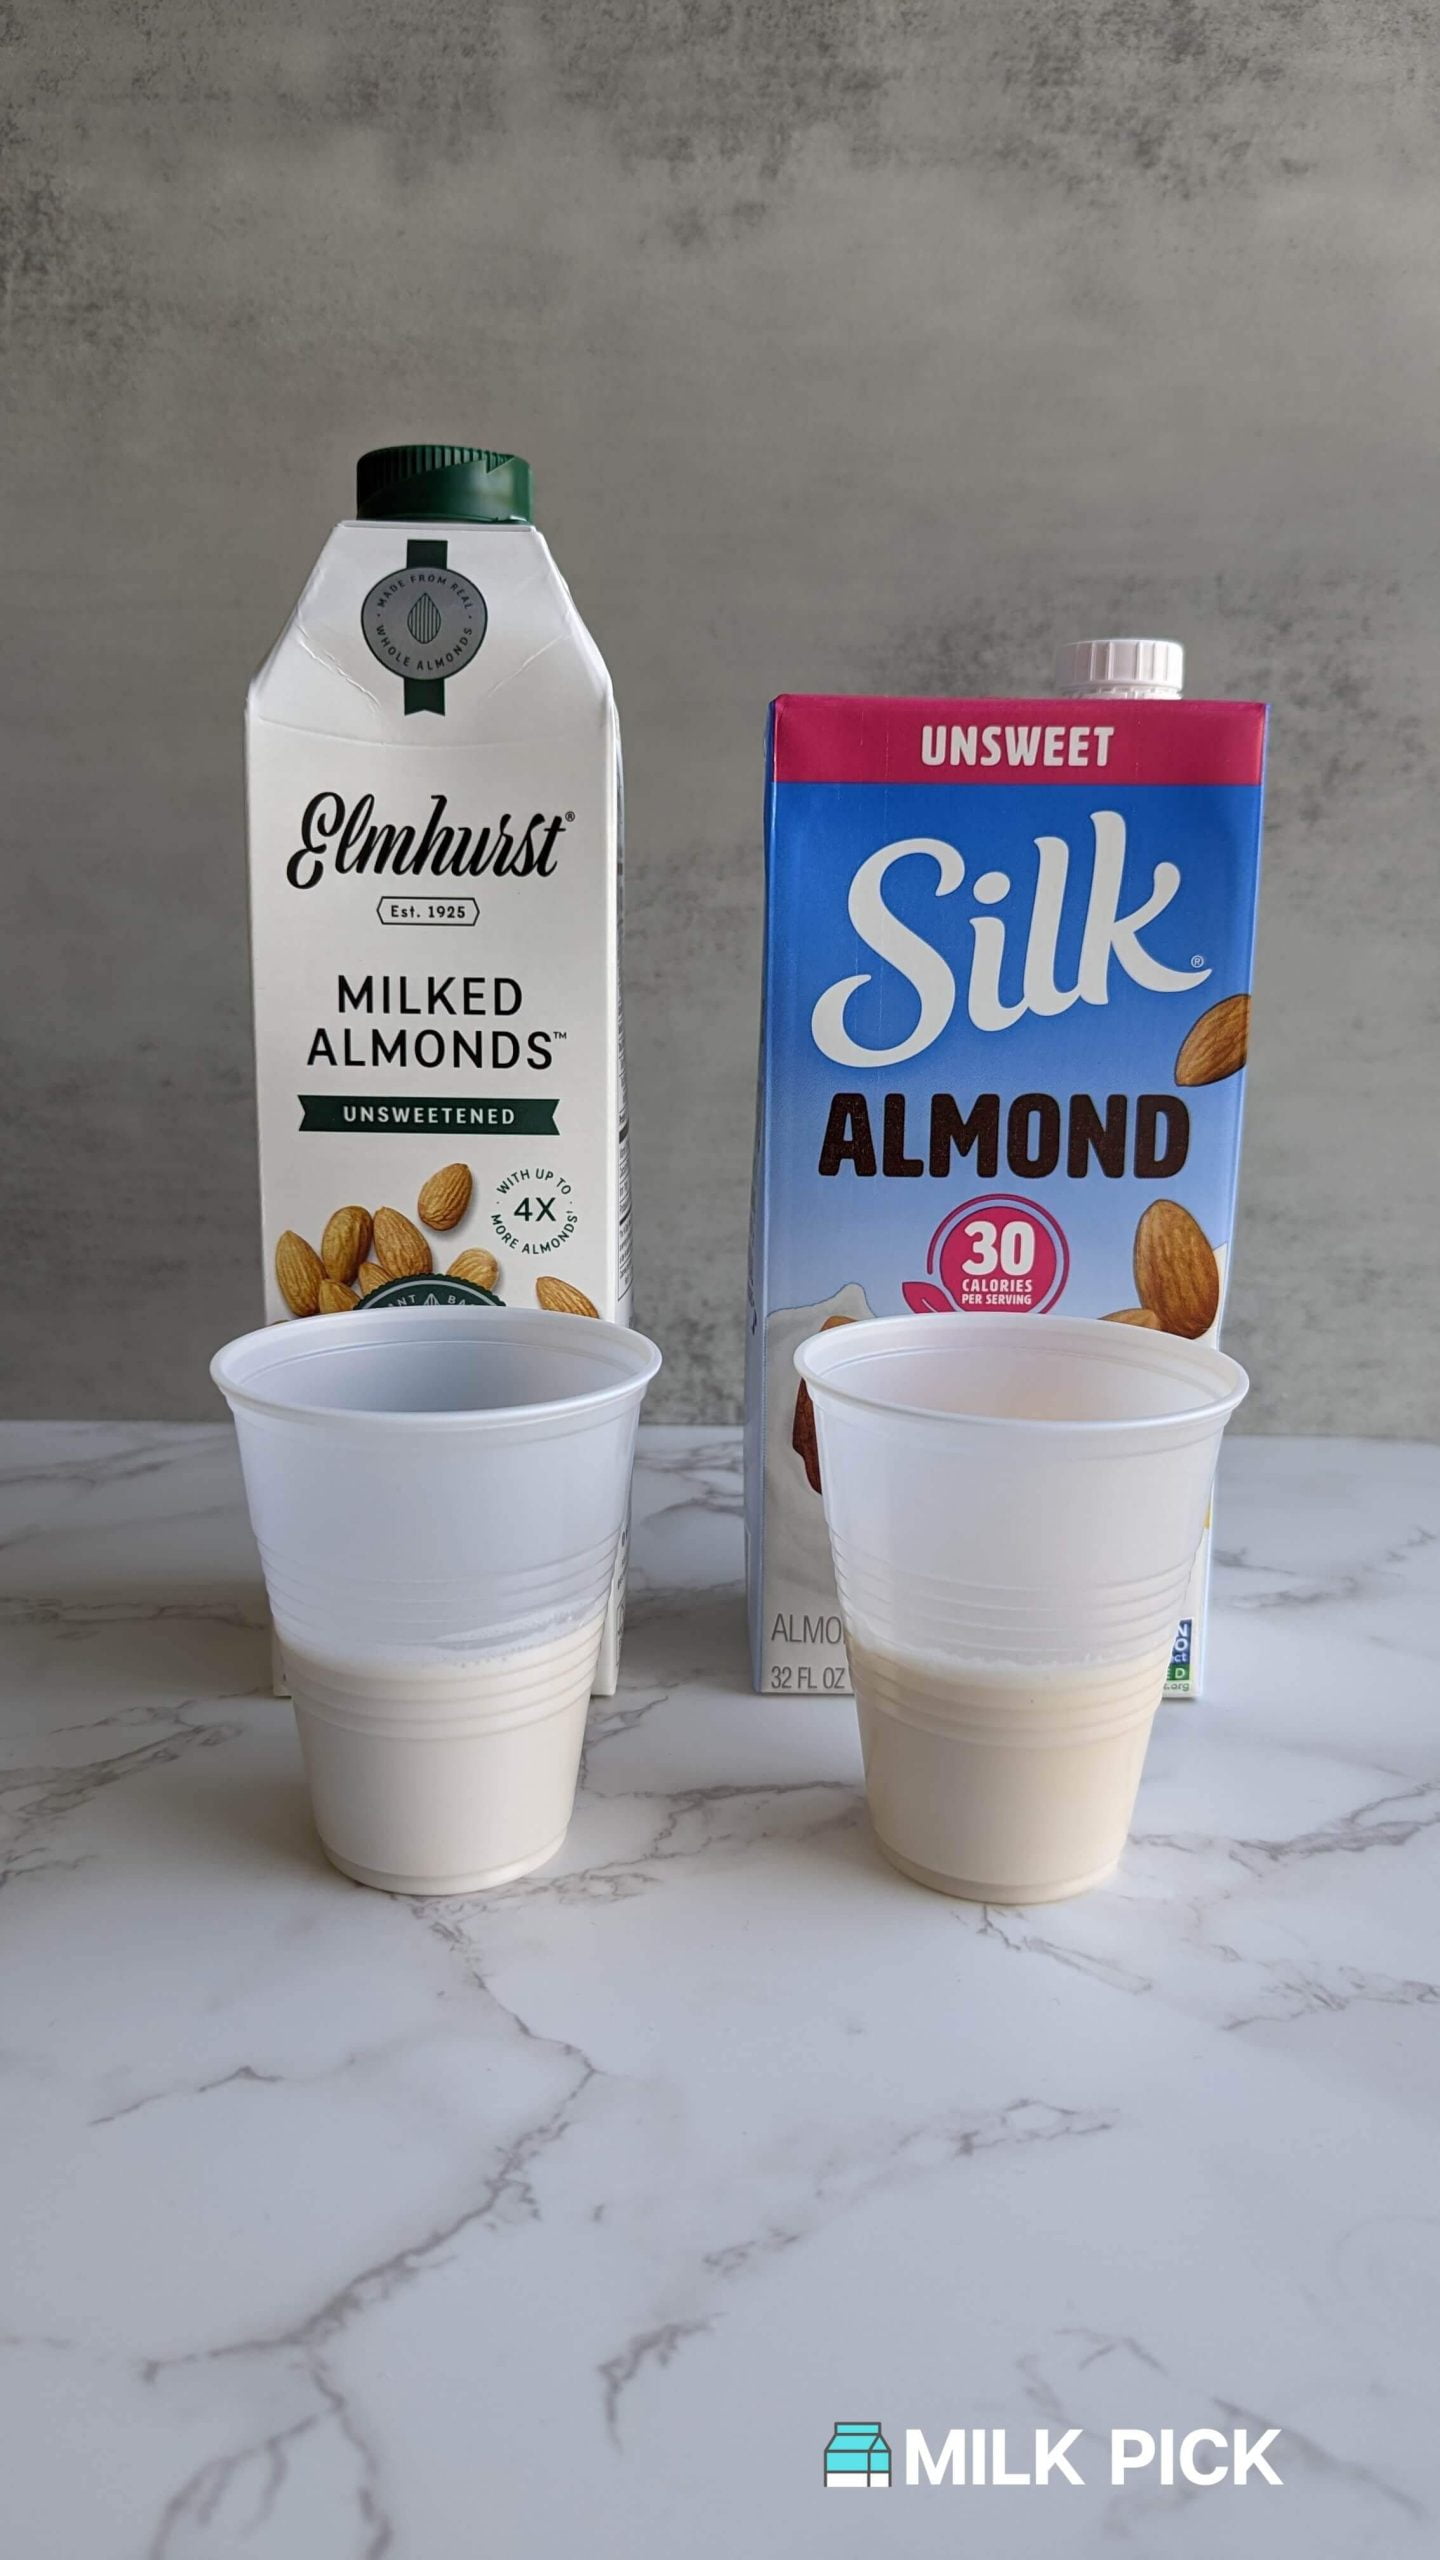 elmhurst and silk almond milk cartons and cups